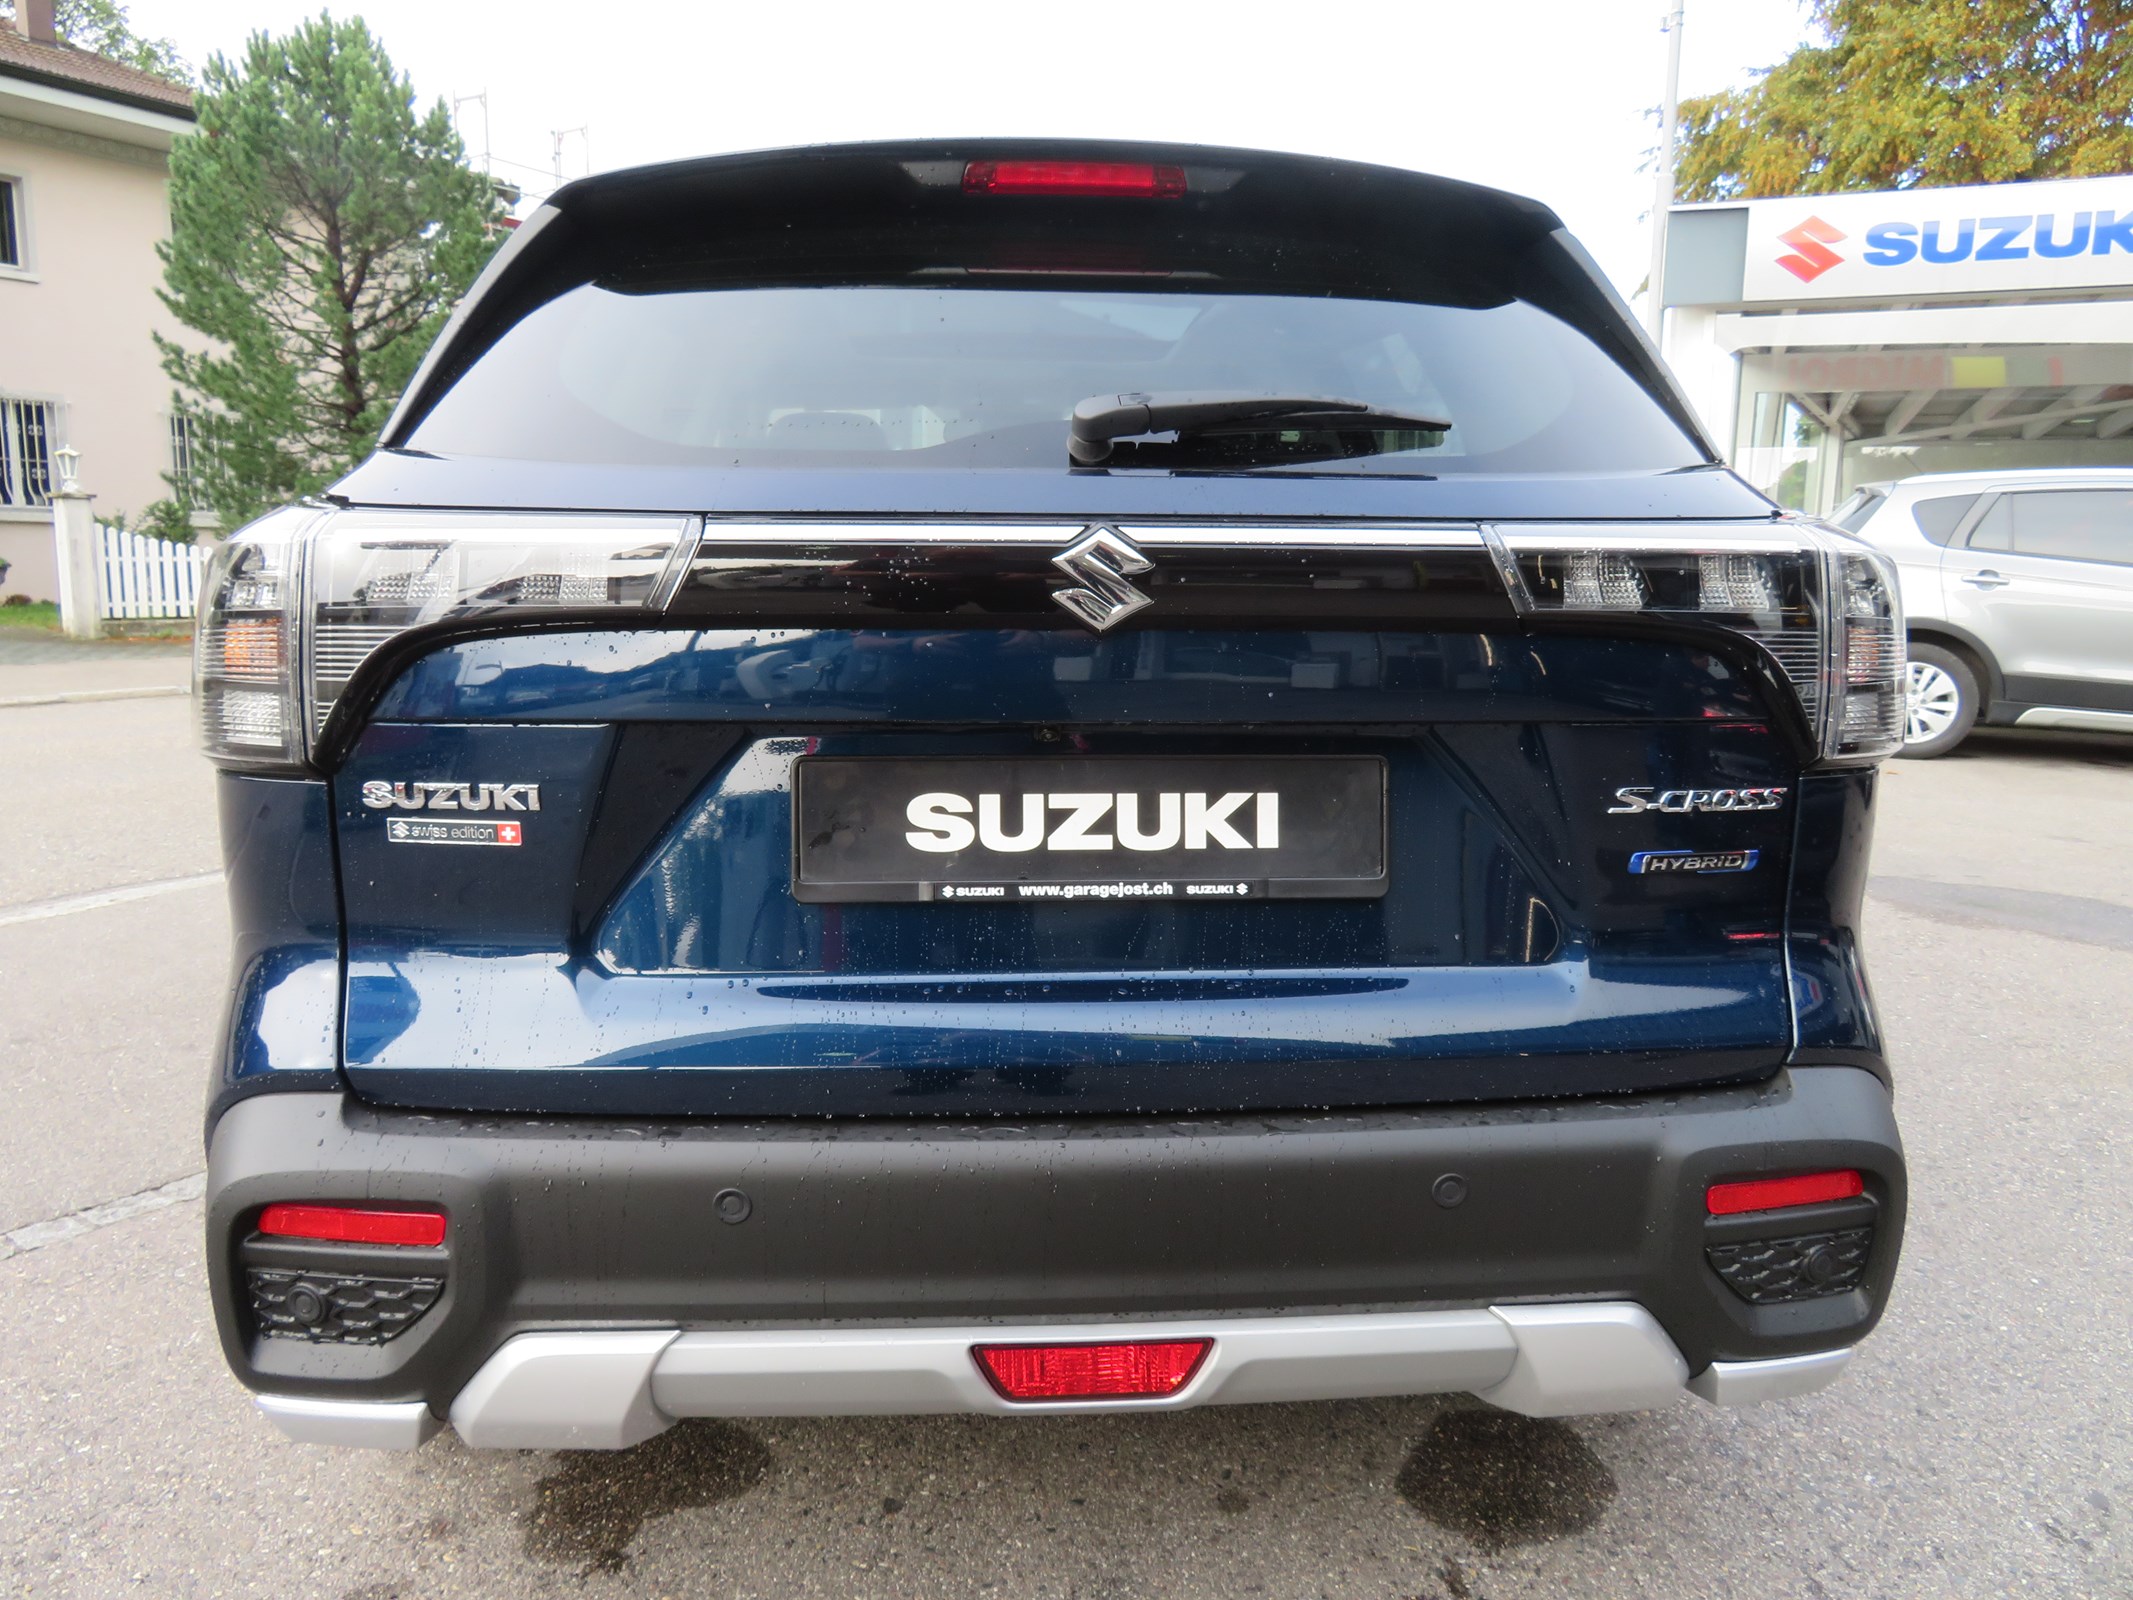 SUZUKI S-Cross 1.5 Piz Sulai Top Hybrid